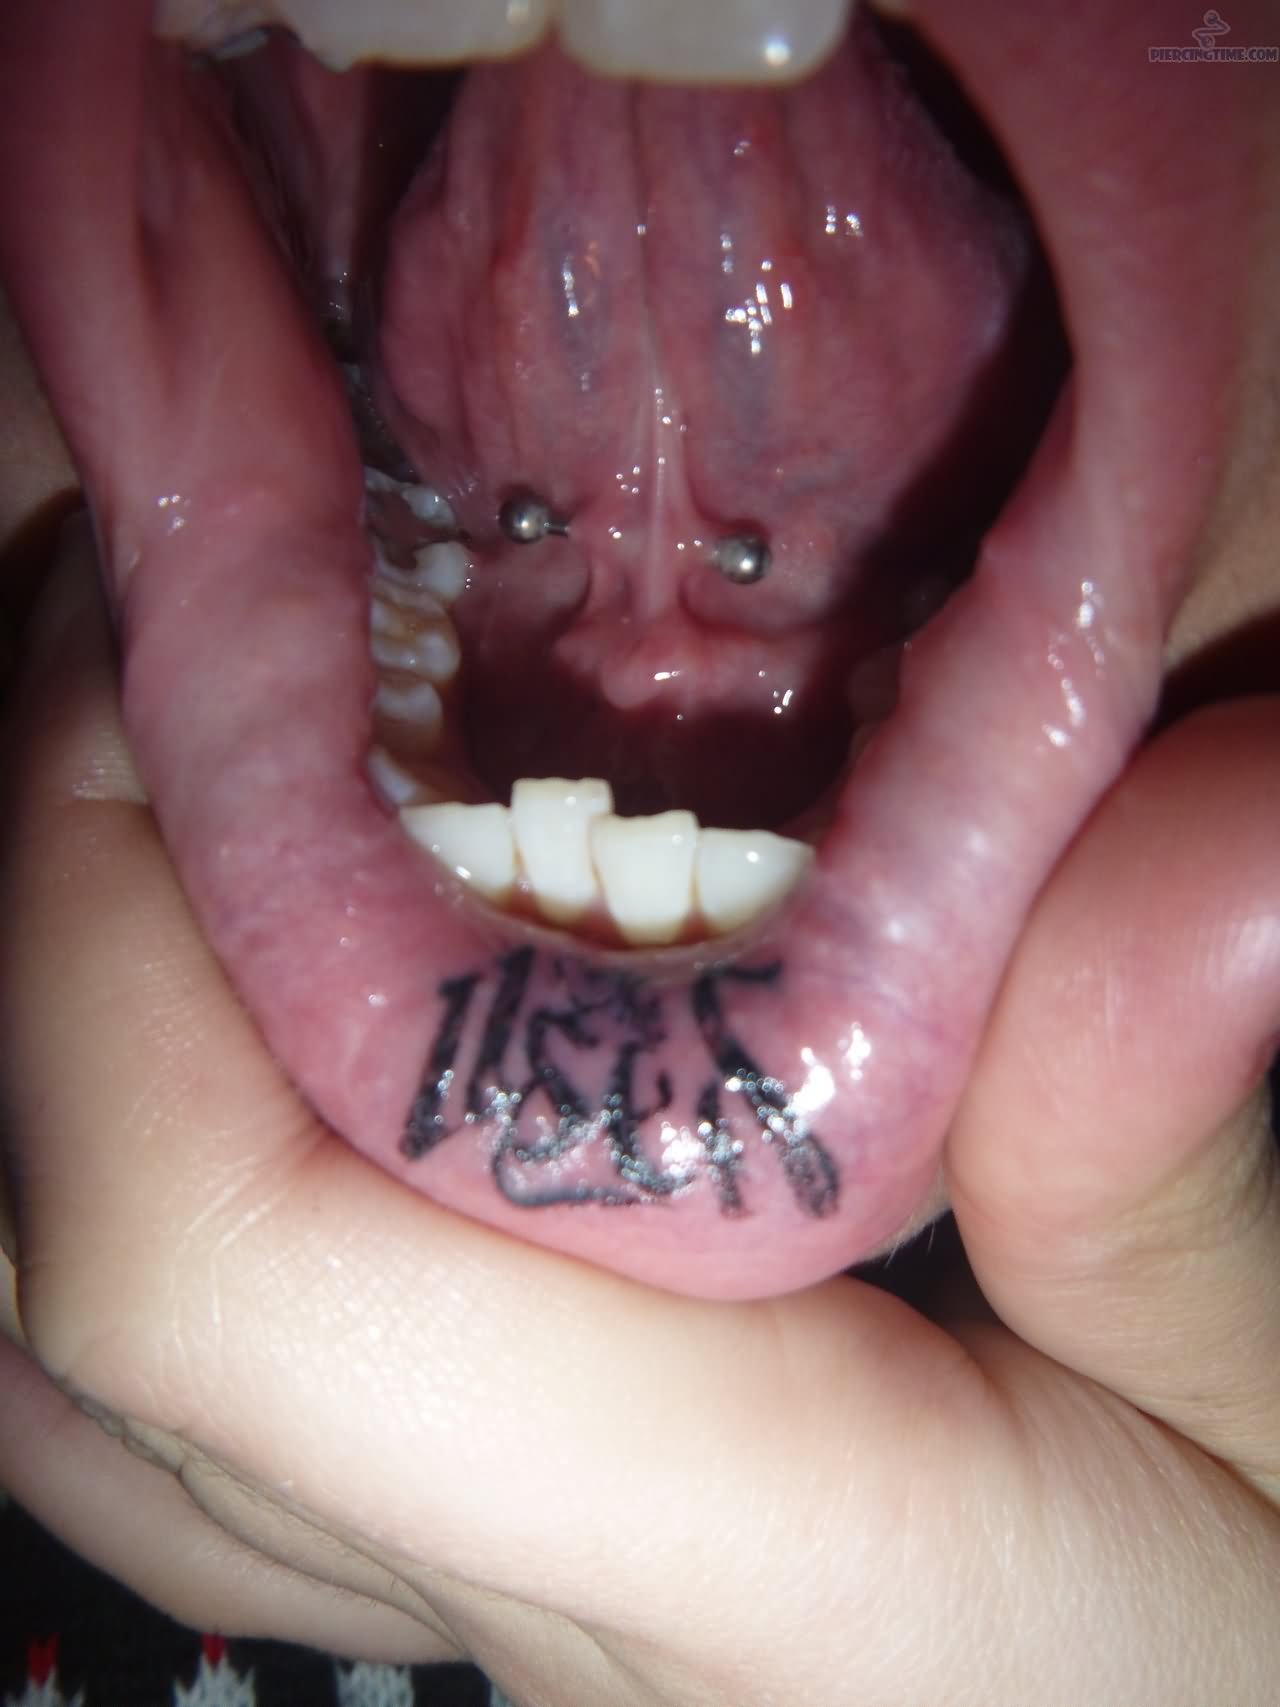 Silver Barbell Tongue Frenulum Piercing Sample